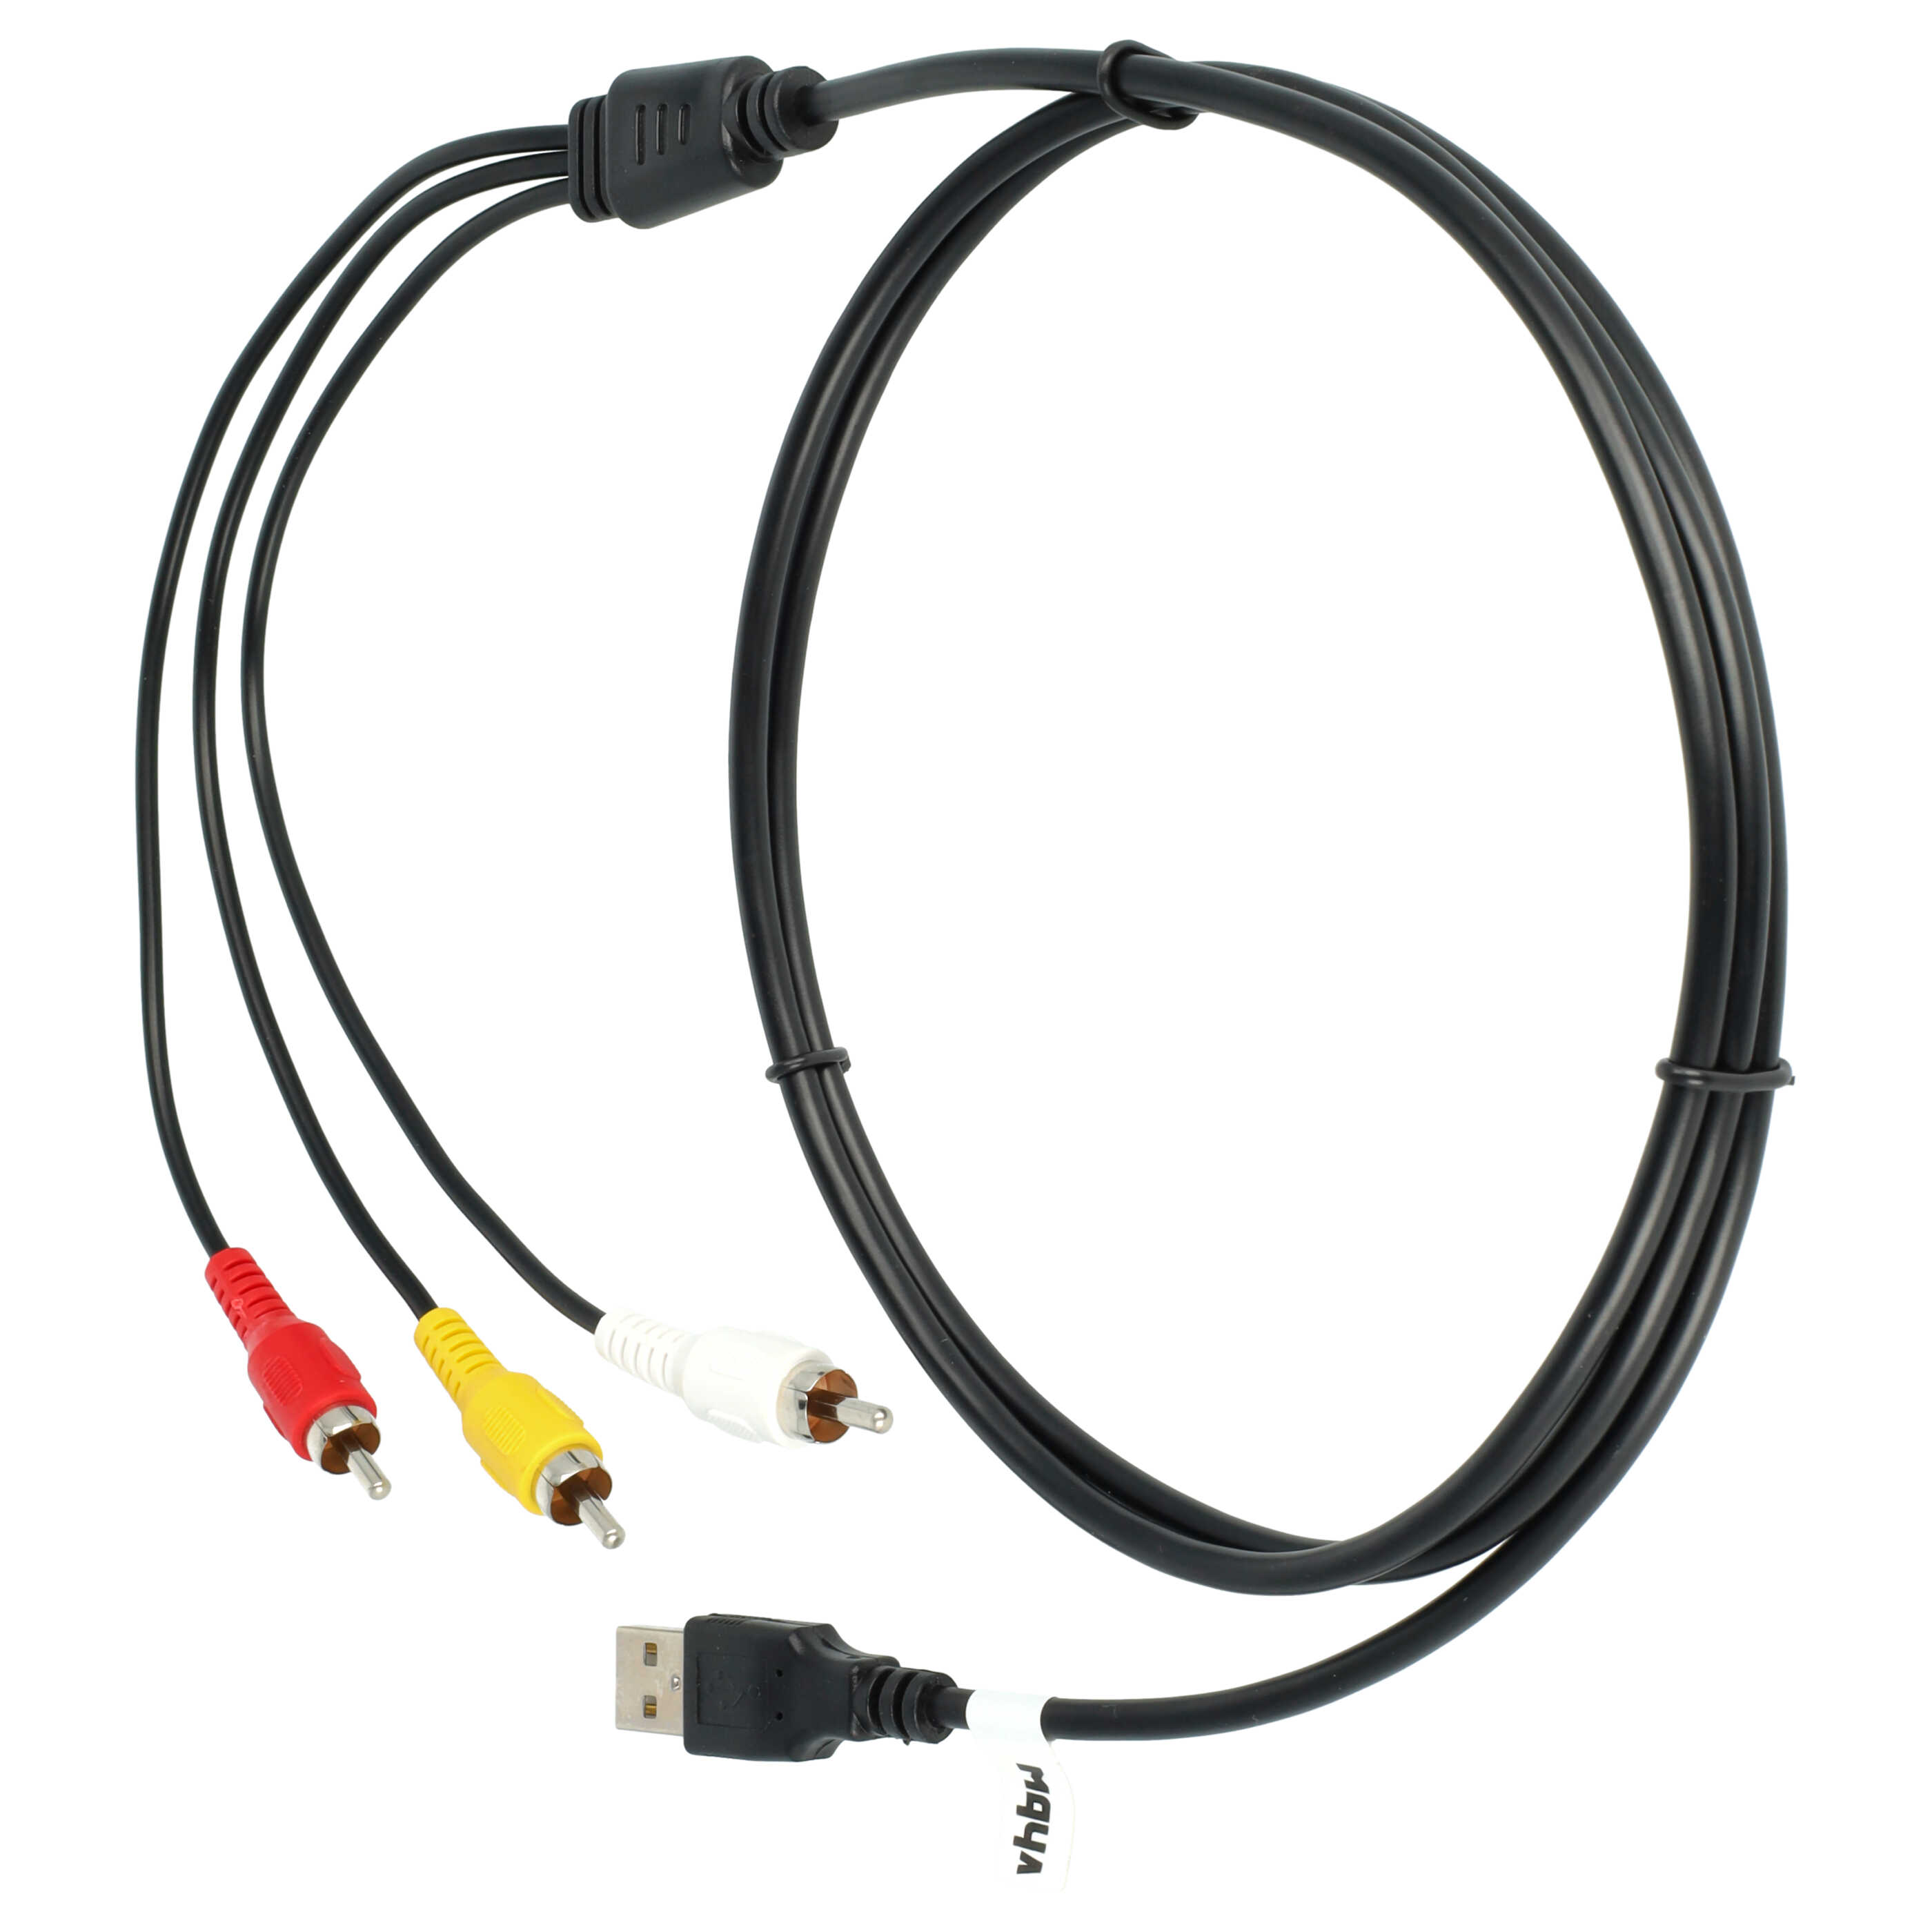 vhbw Cable AV de USB a Cinch compatible con reproductores HDD, sistemas AV estéreo - Clavija USB A 2.0 a clavi